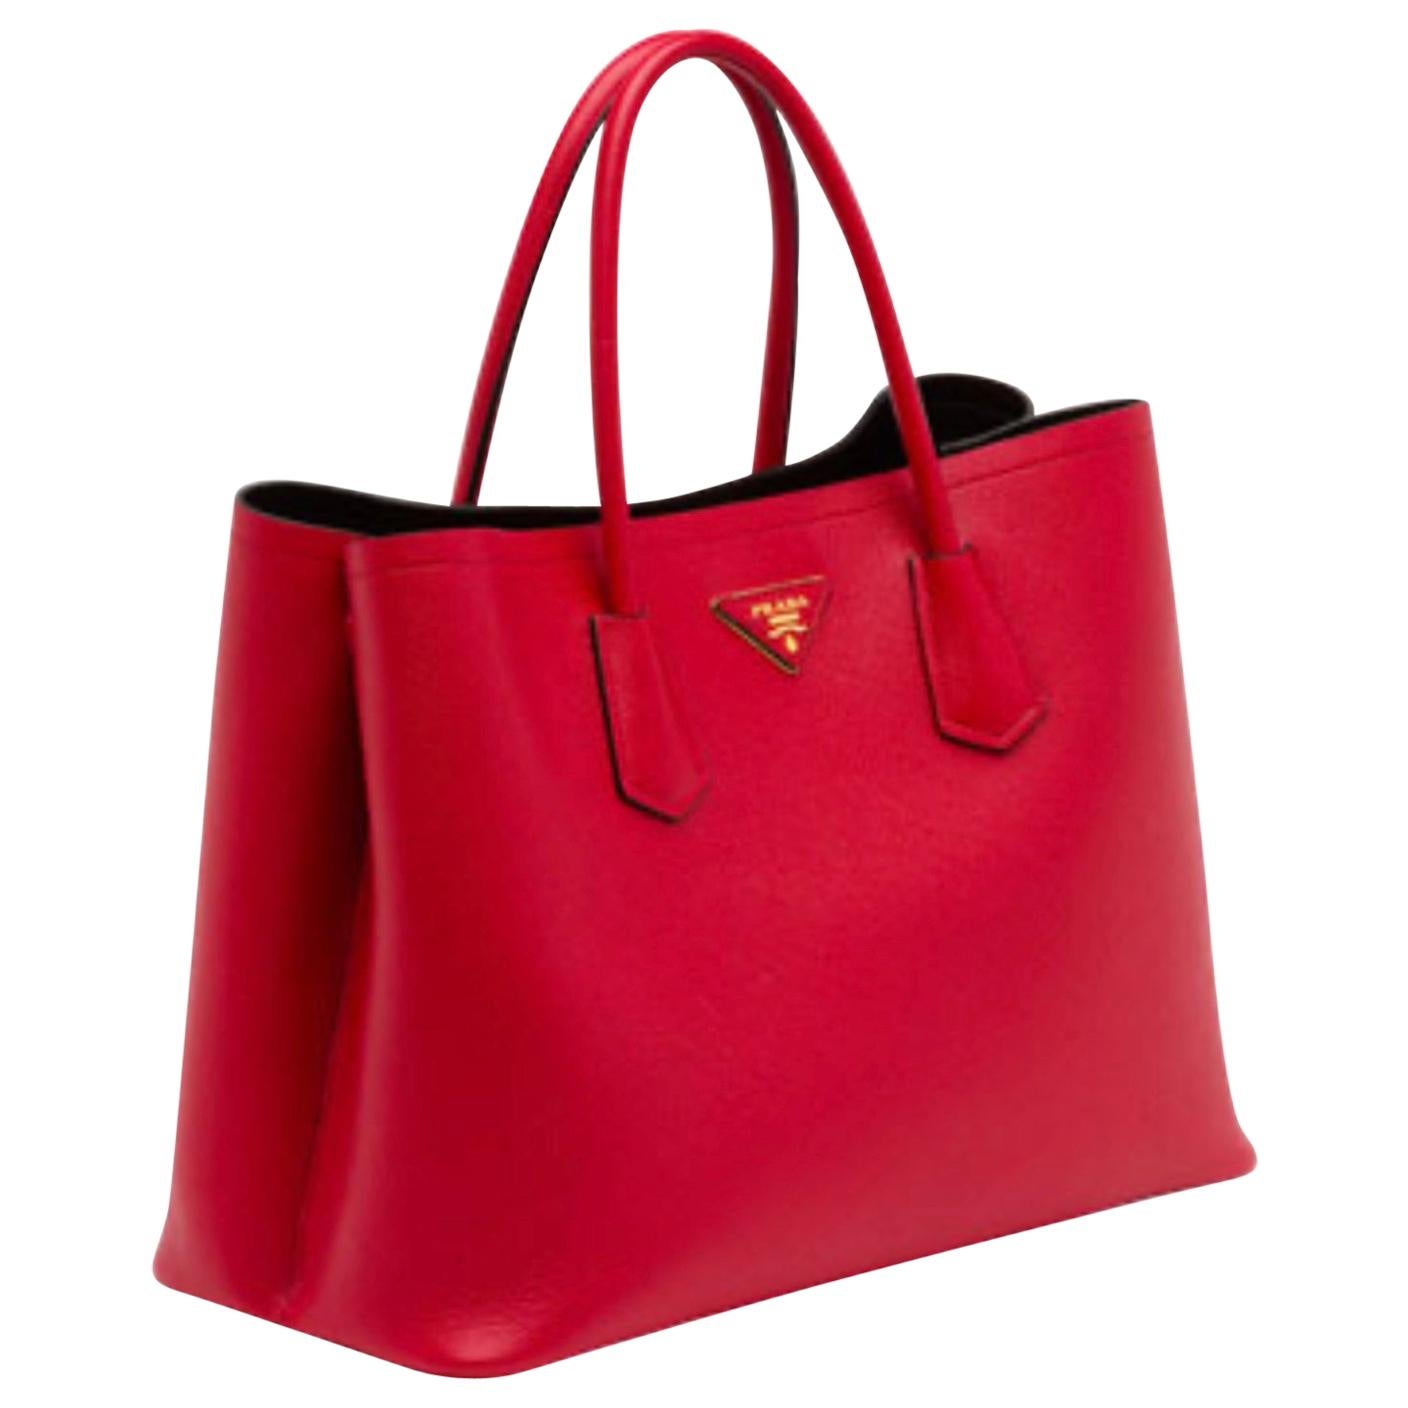 Black/fiery Red Medium Saffiano Leather Prada Panier Bag